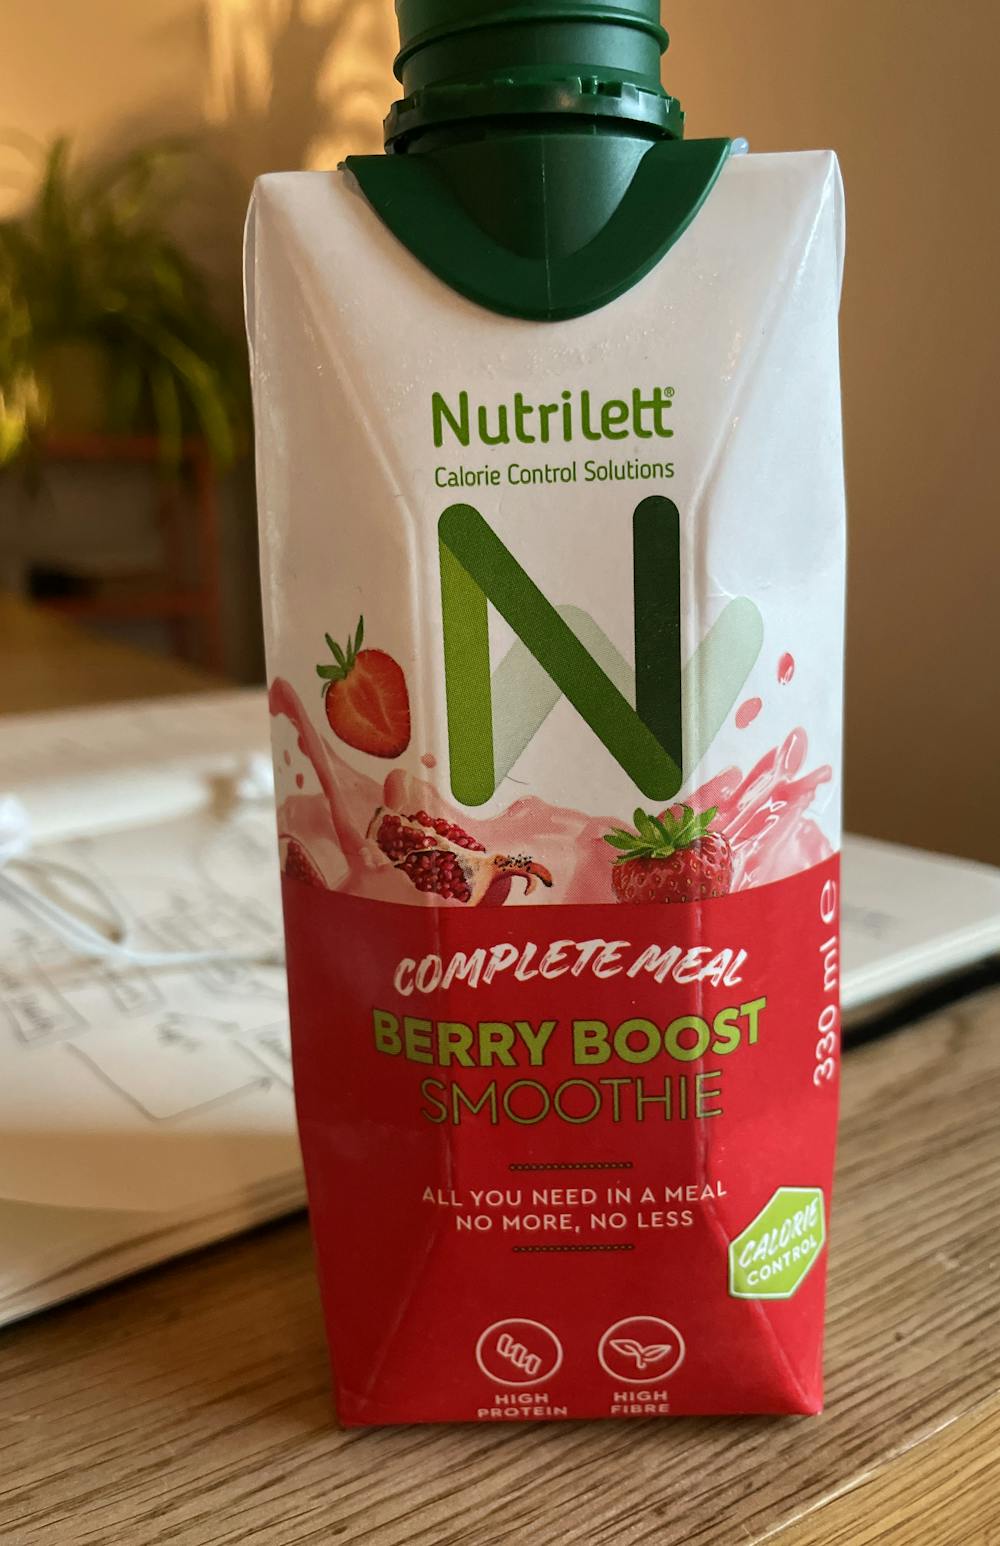 Berry boost smoothie, Nutrilett